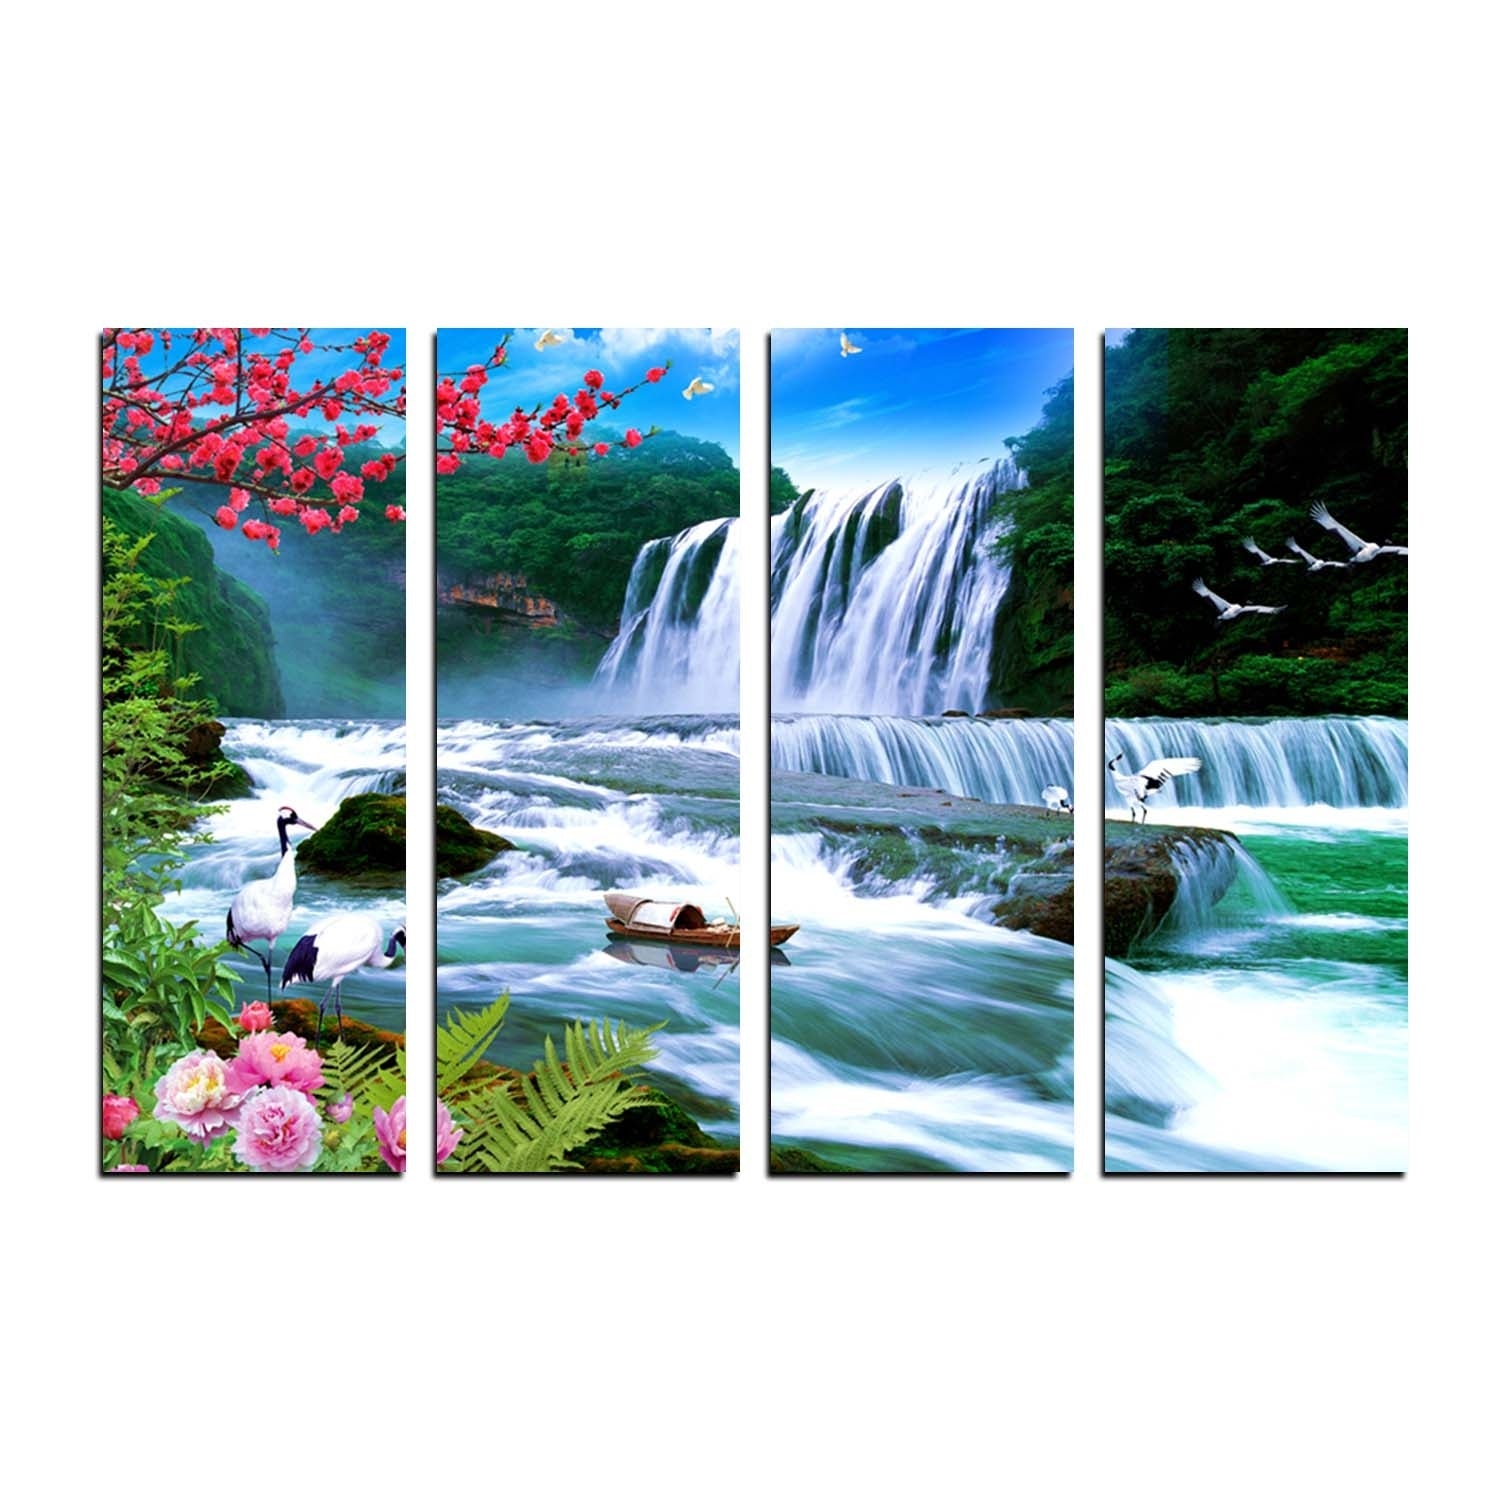 4 Panel Waterfall Scenic View Premium Canvas Painting